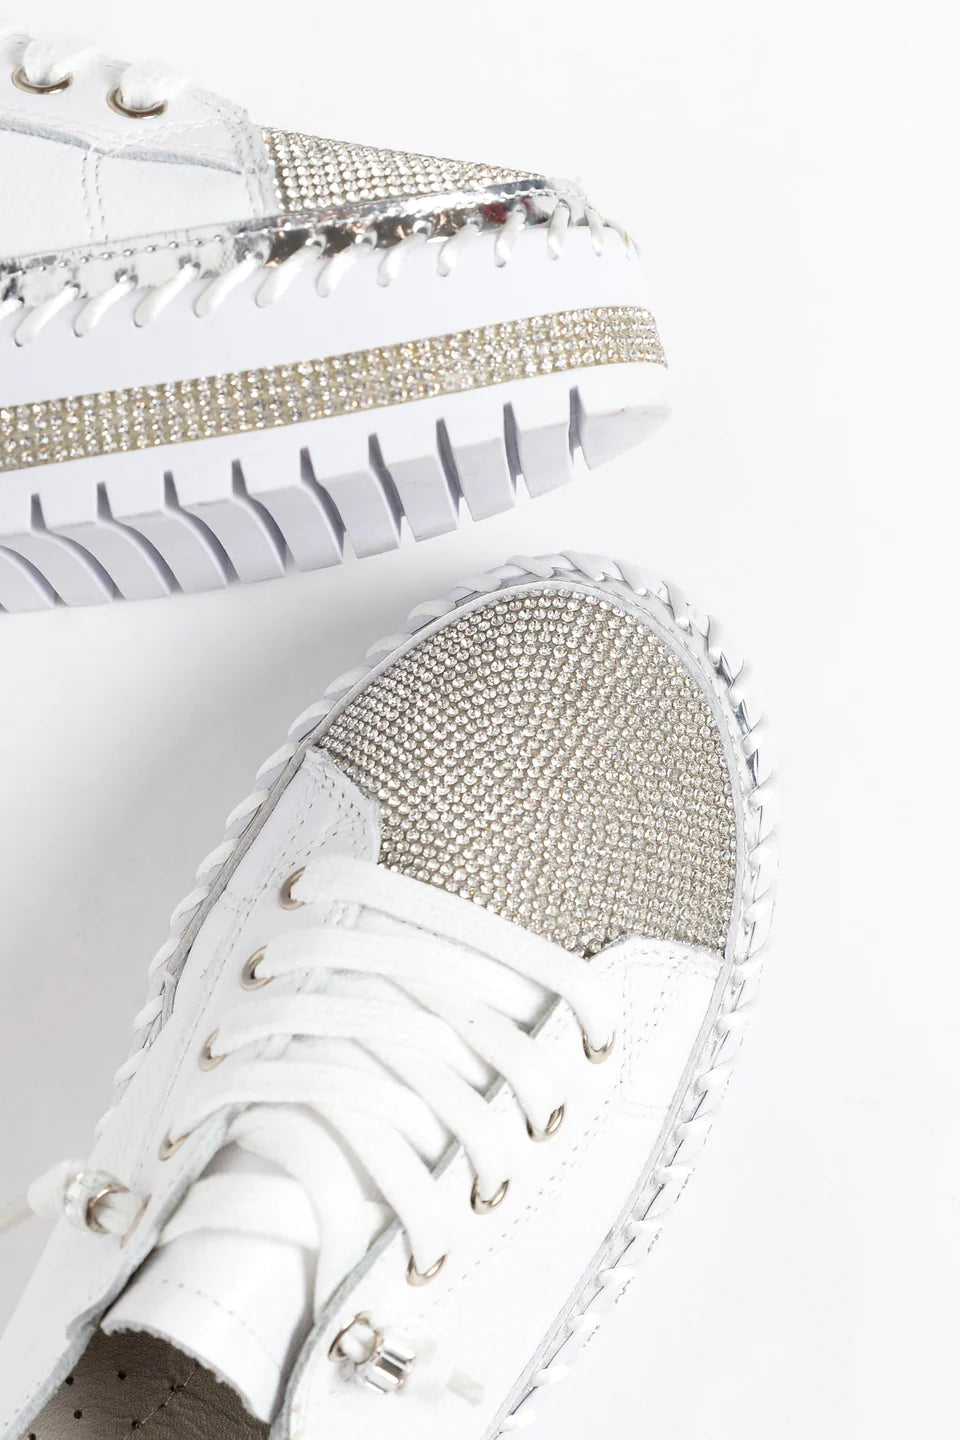 Crystal Silver Leather Sneakers - 50% έκπτωση για περιορισμένο χρονικό διάστημα